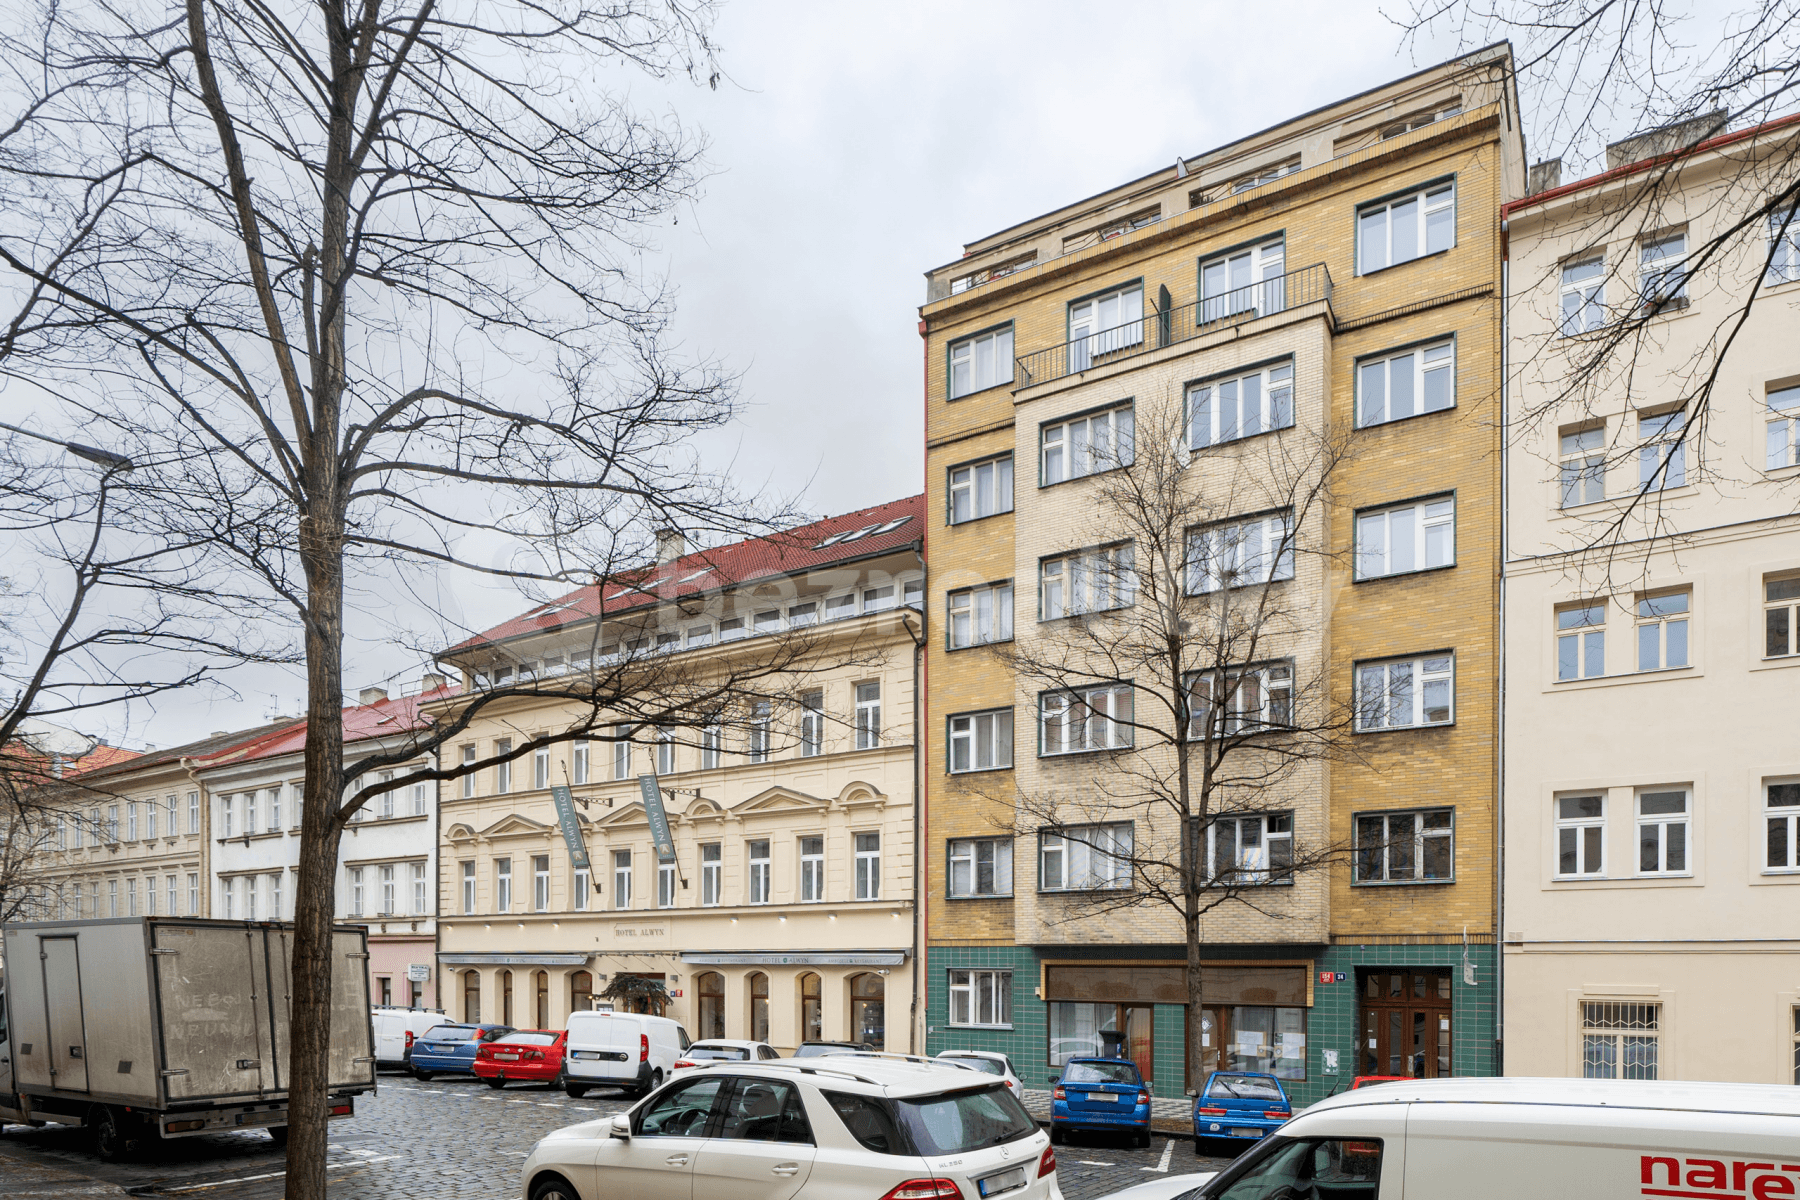 1 bedroom with open-plan kitchen flat to rent, 47 m², Vítkova, Prague, Prague